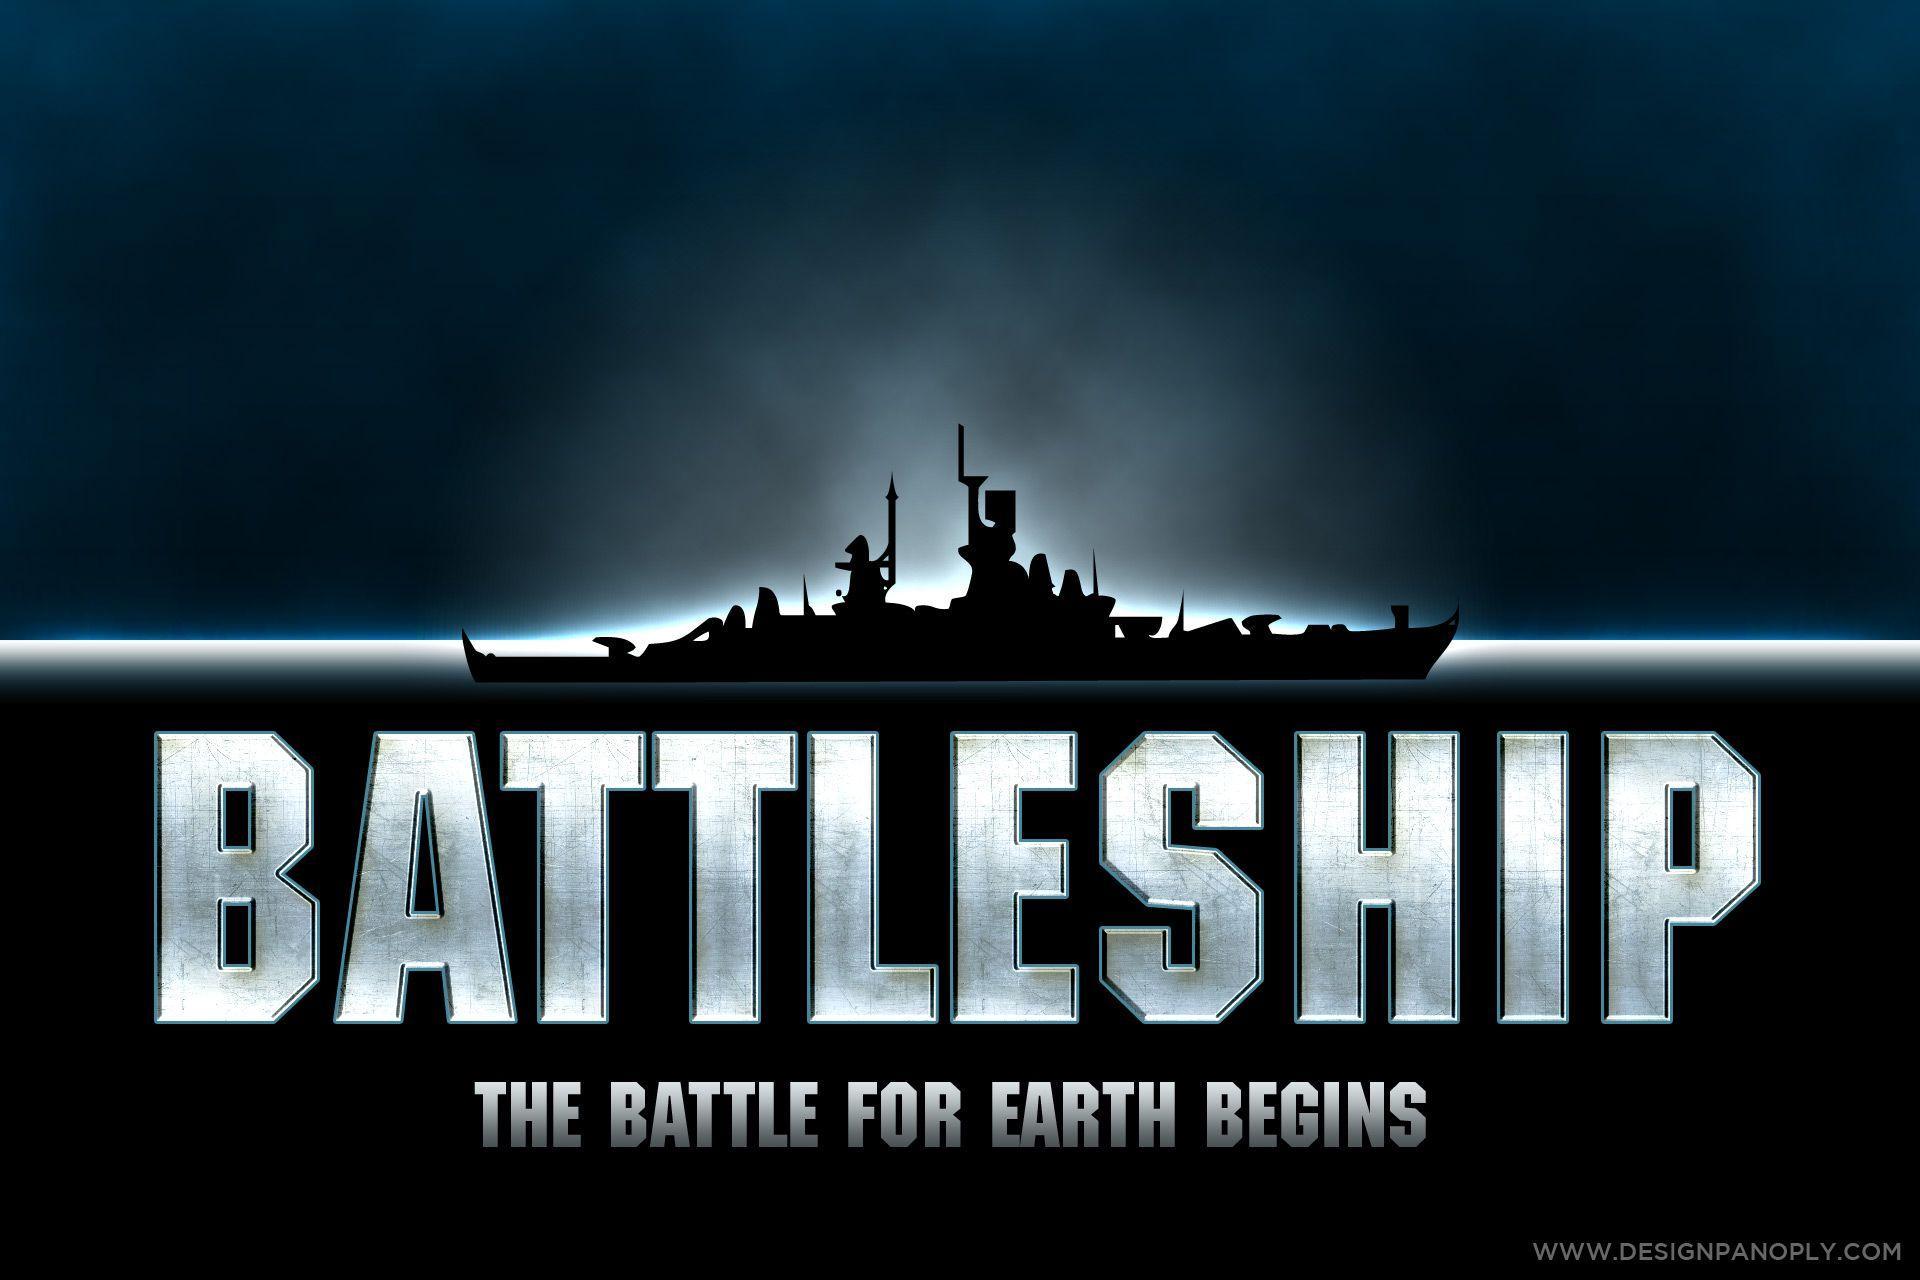 Battleship Logo - Battleship Text Effect Using Photoshop Layer Styles | Design Panoply